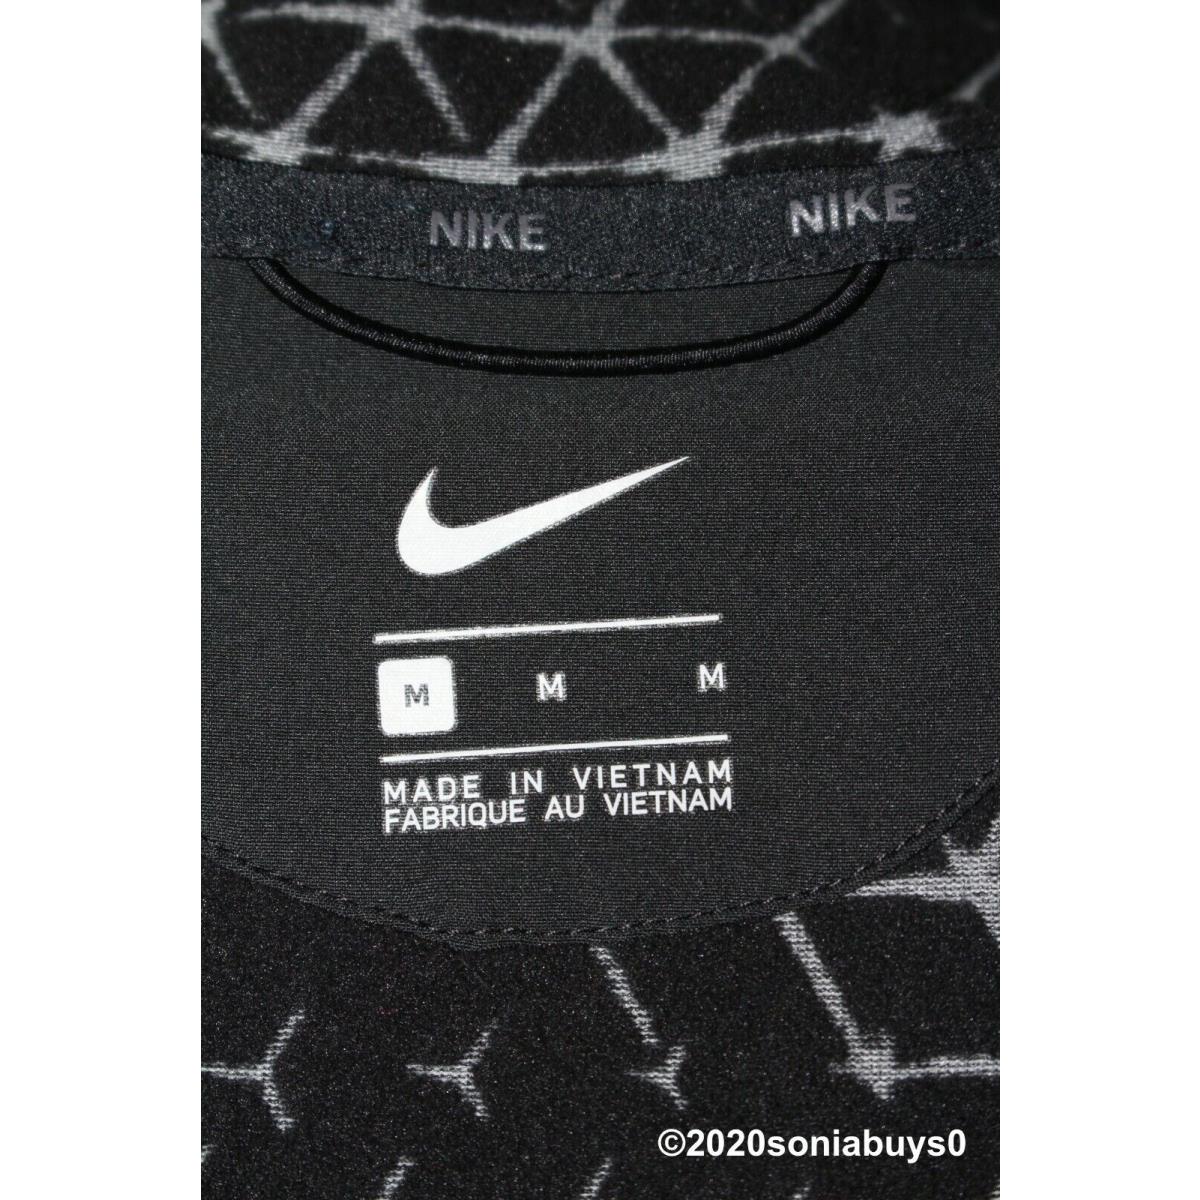 Nike clothing  - Anthracite/Black 6